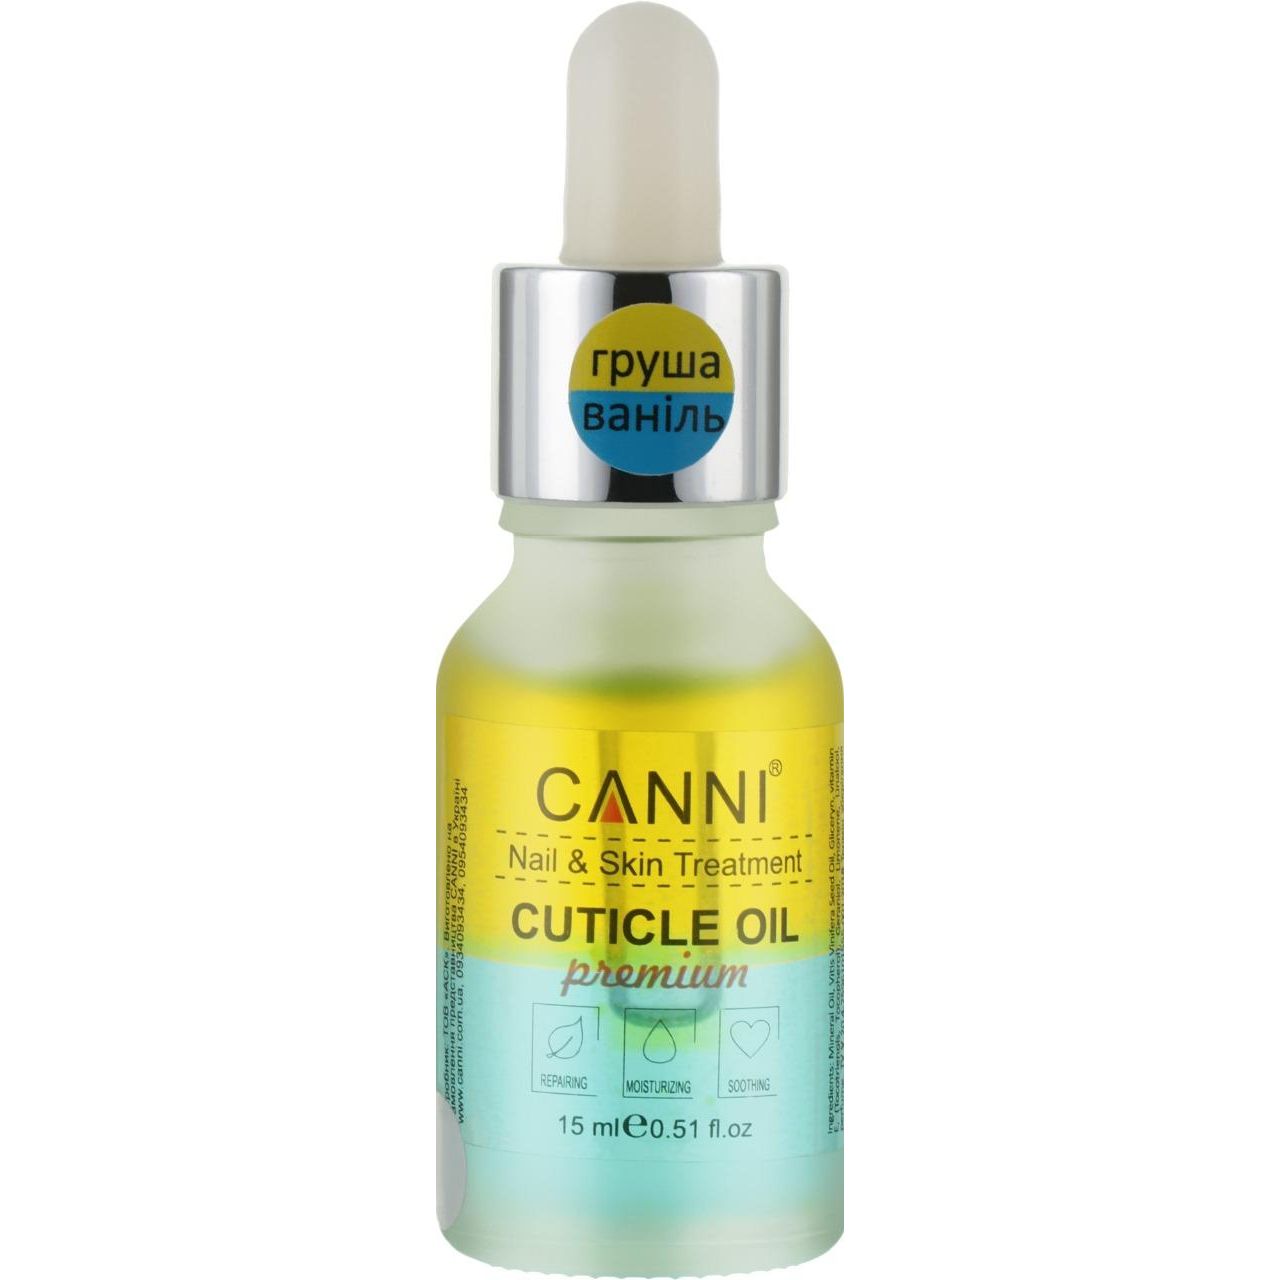 Олійка для кутикули Canni Premium Cuticle Oil двофазна Груша-Ваніль 15 мл - фото 1